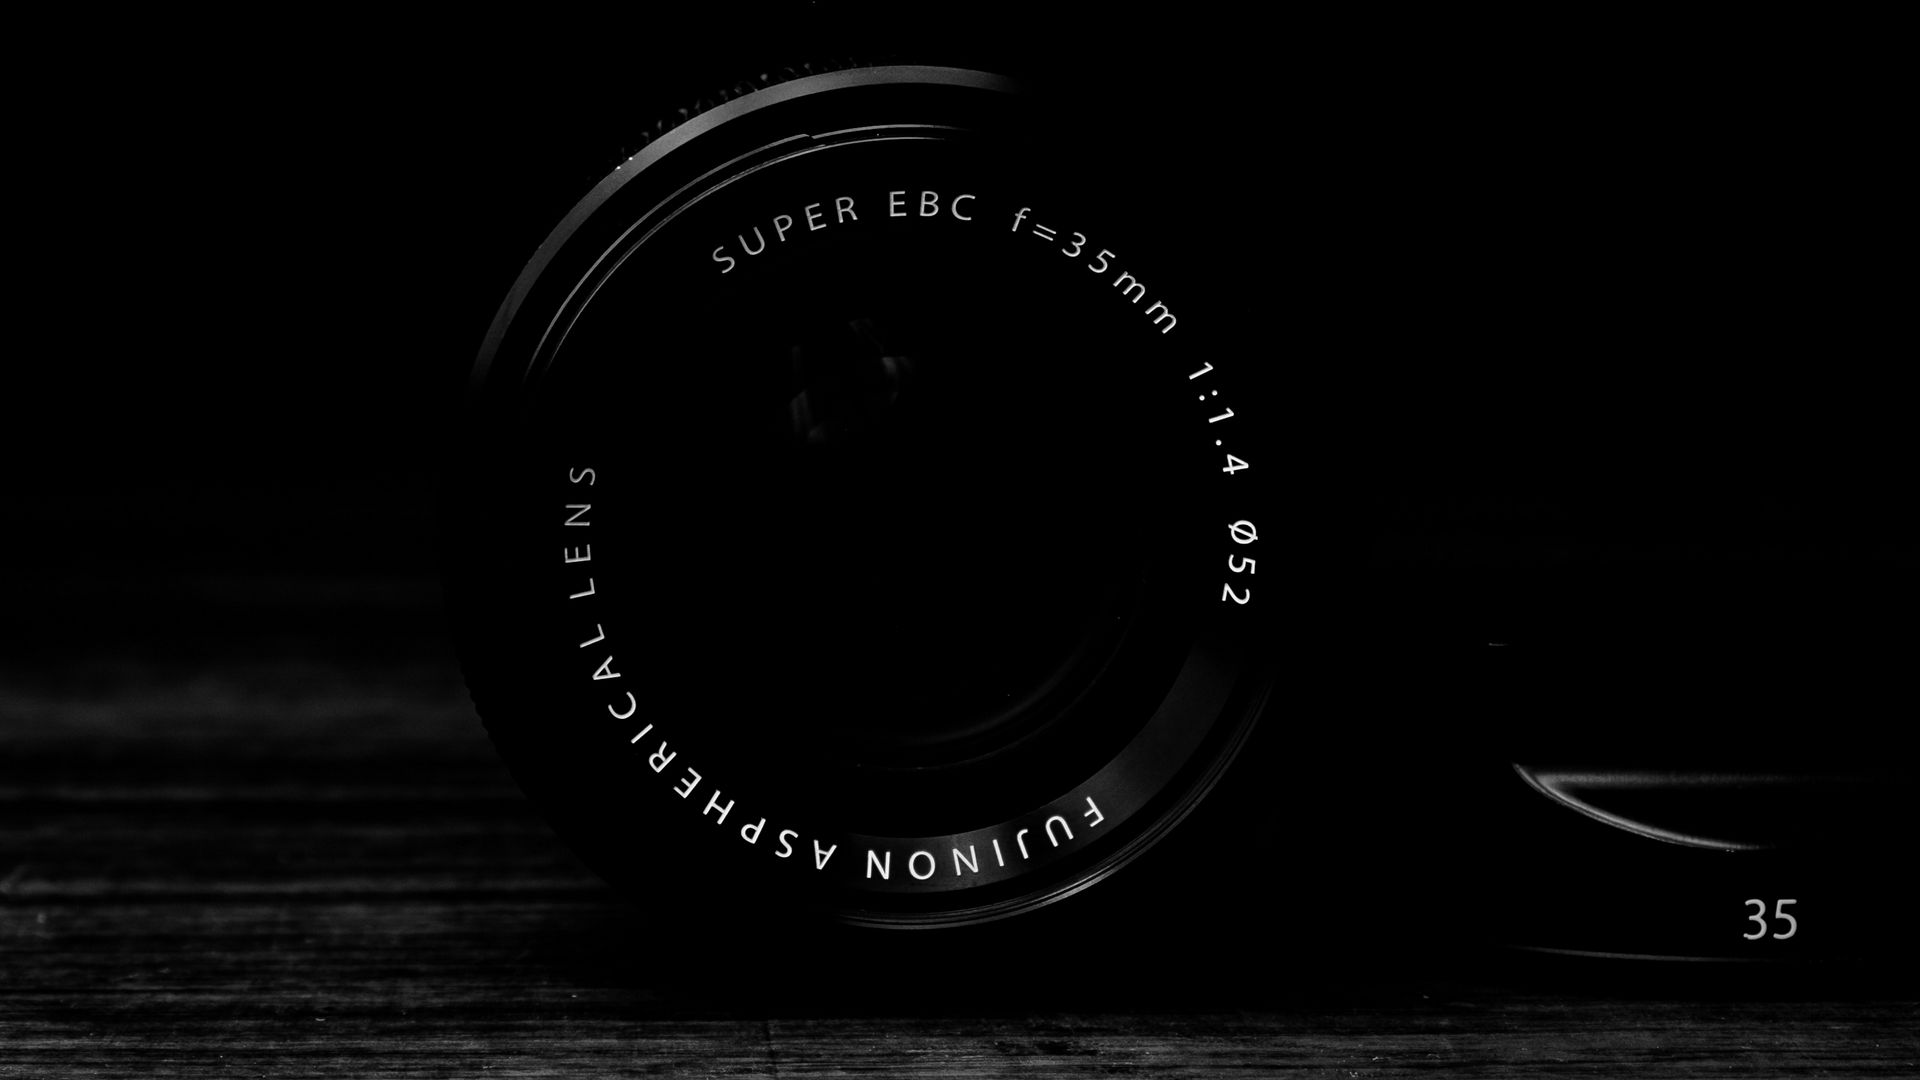 Wallpaper Black Nikon Dslr Camera on White Textile, Background - Download  Free Image